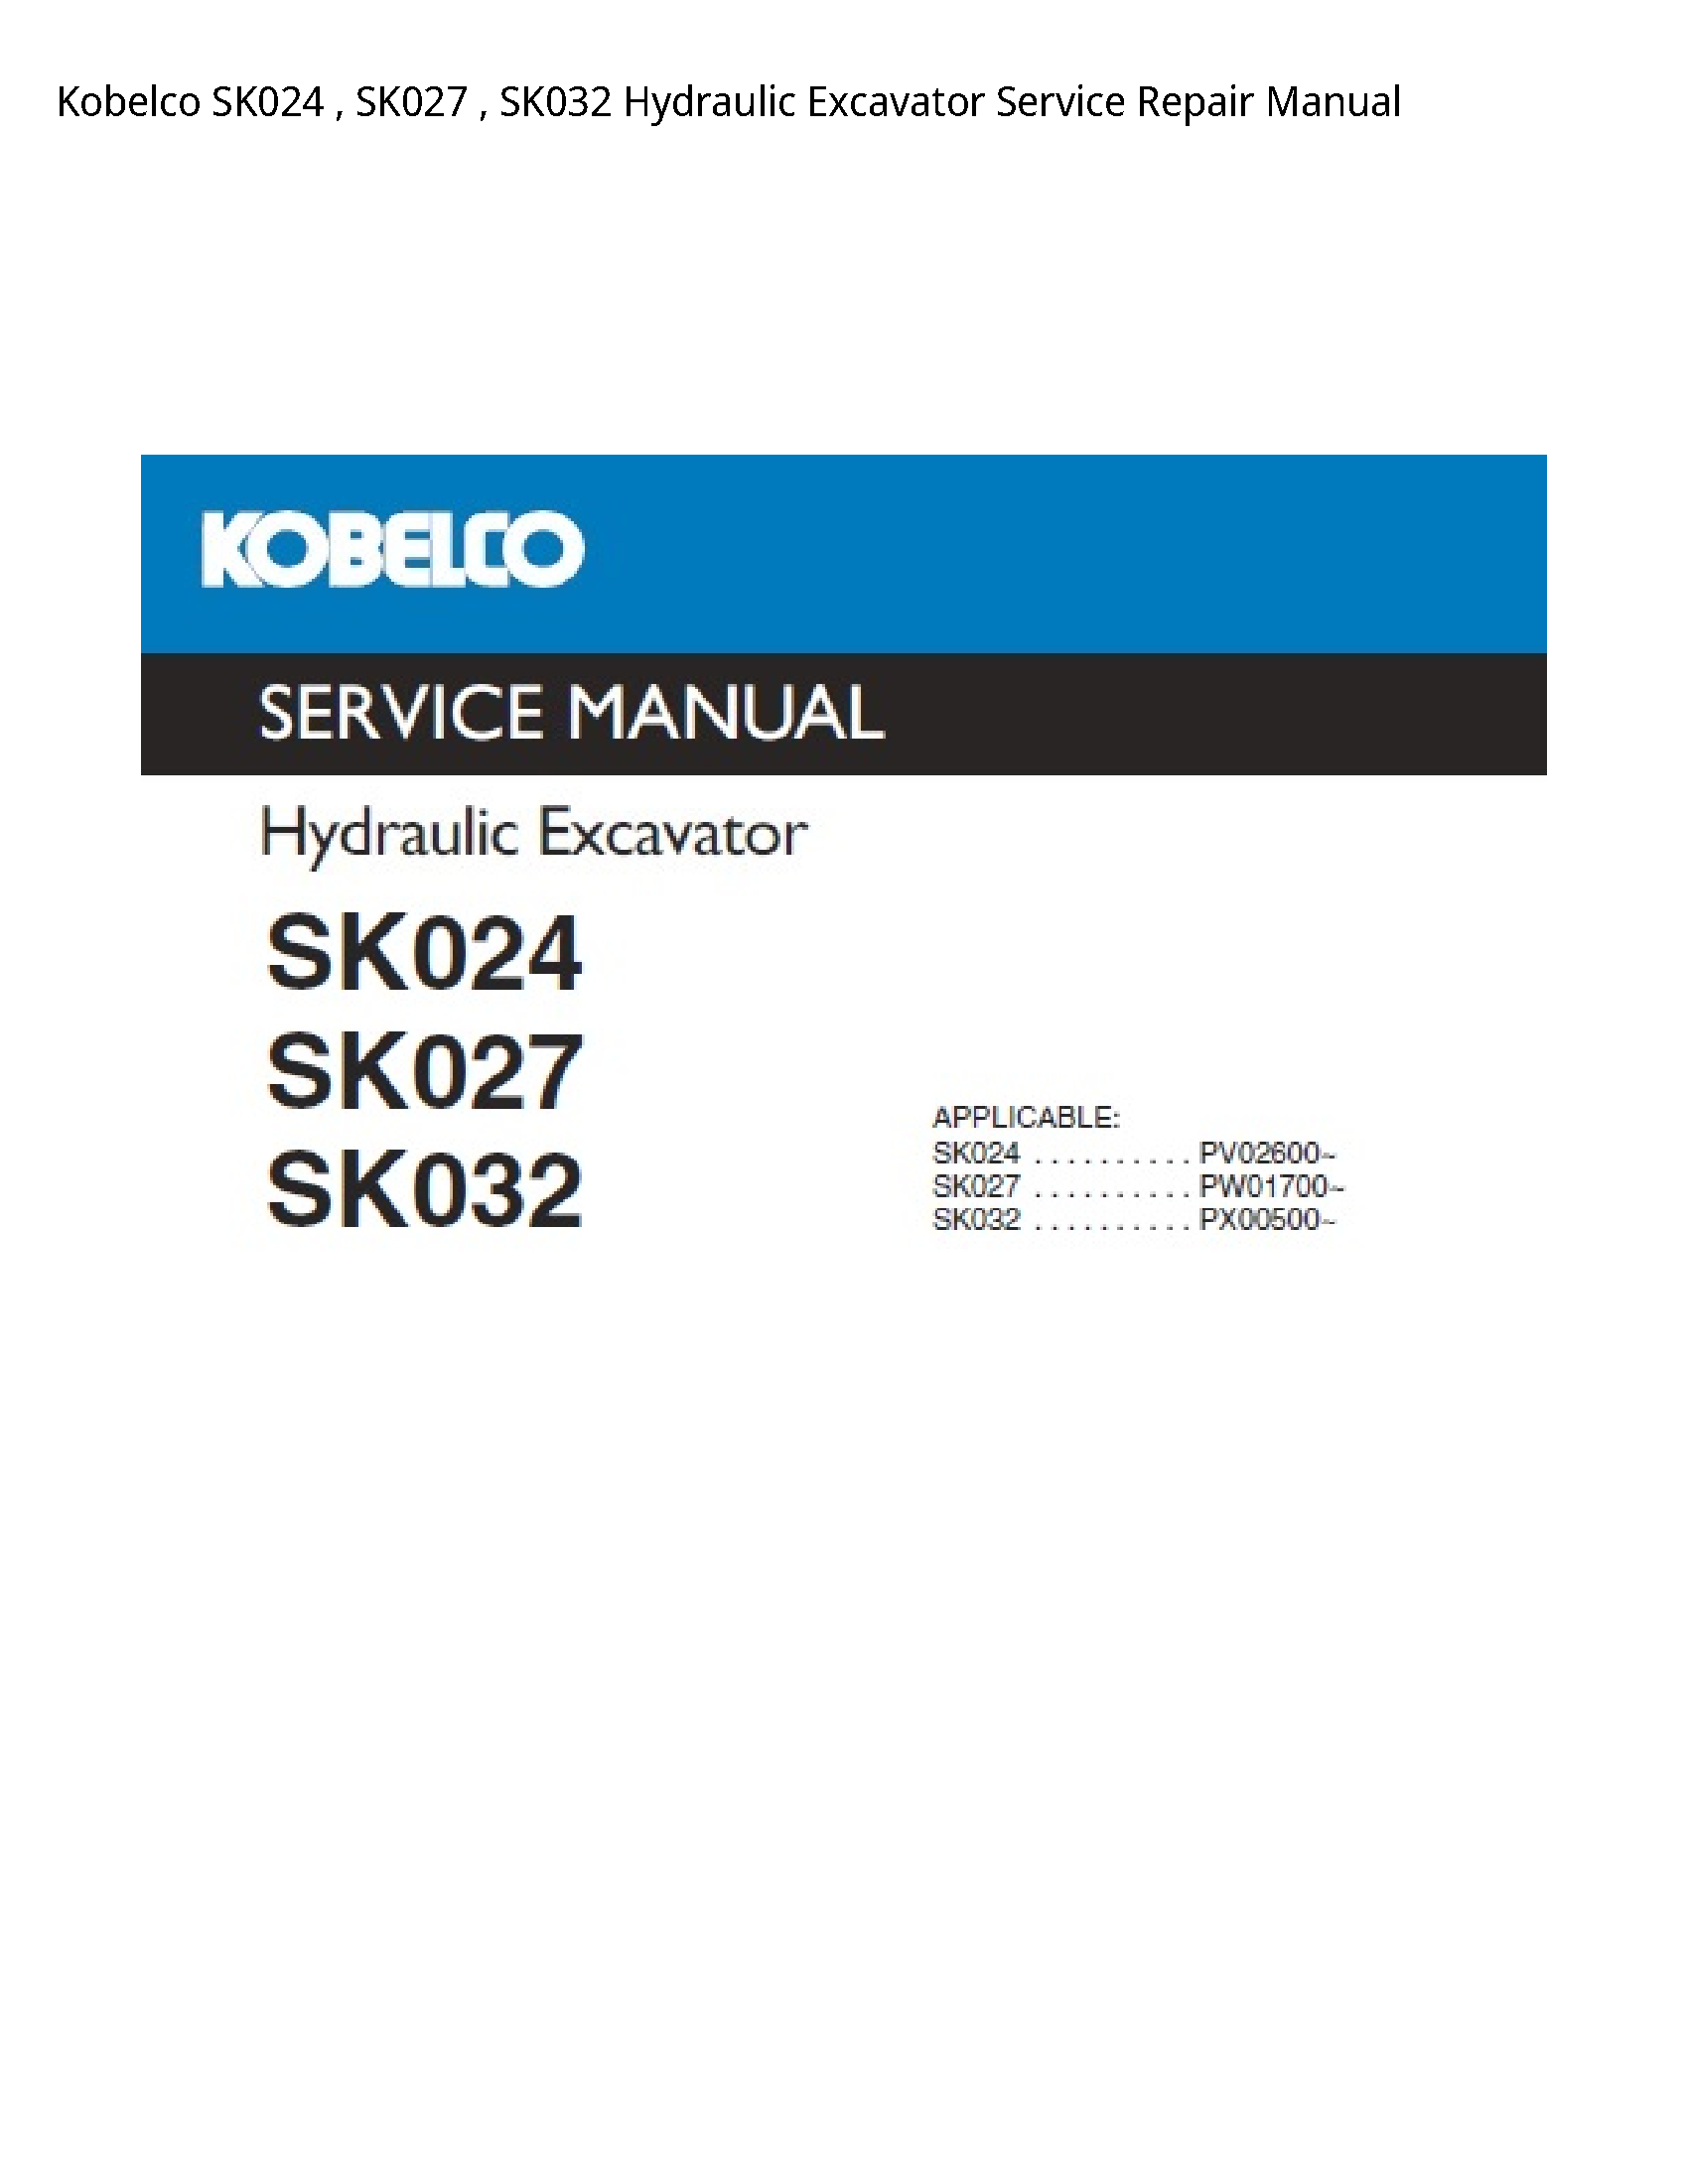 Kobelco SK024 Hydraulic Excavator manual